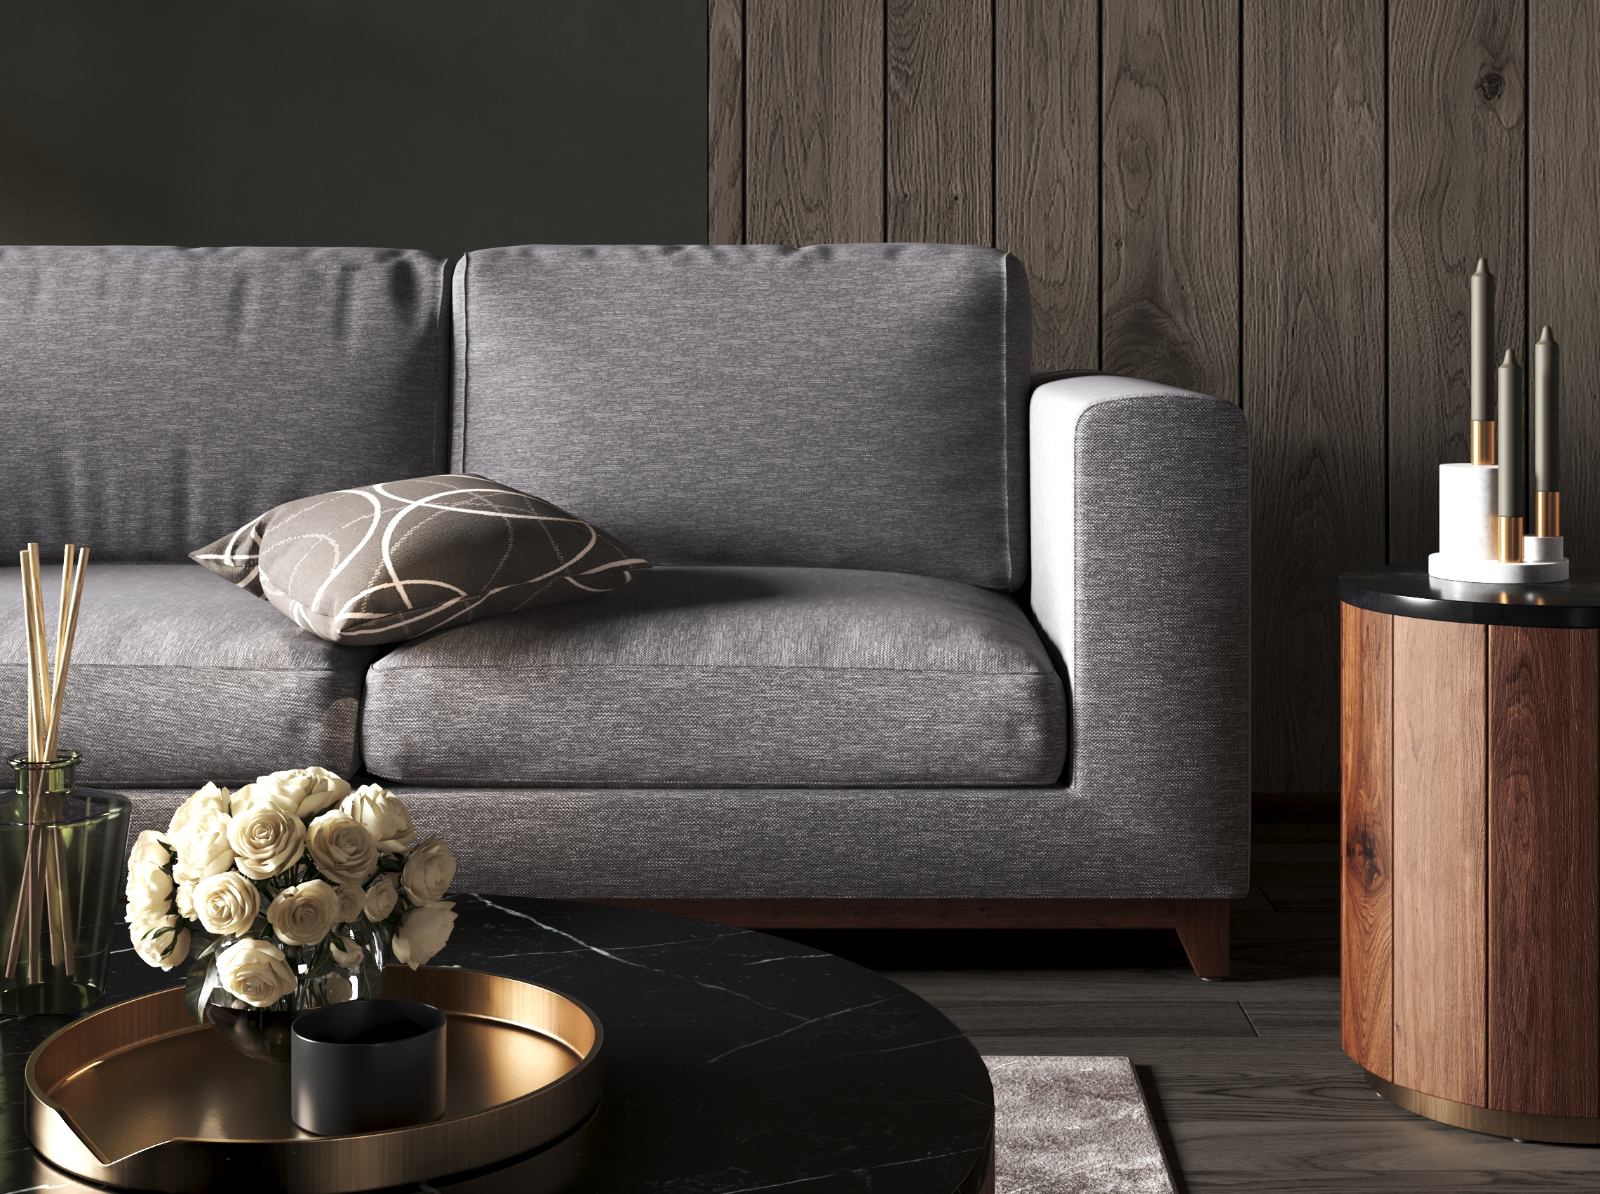 Best Deals On Quality Living Room Furniture